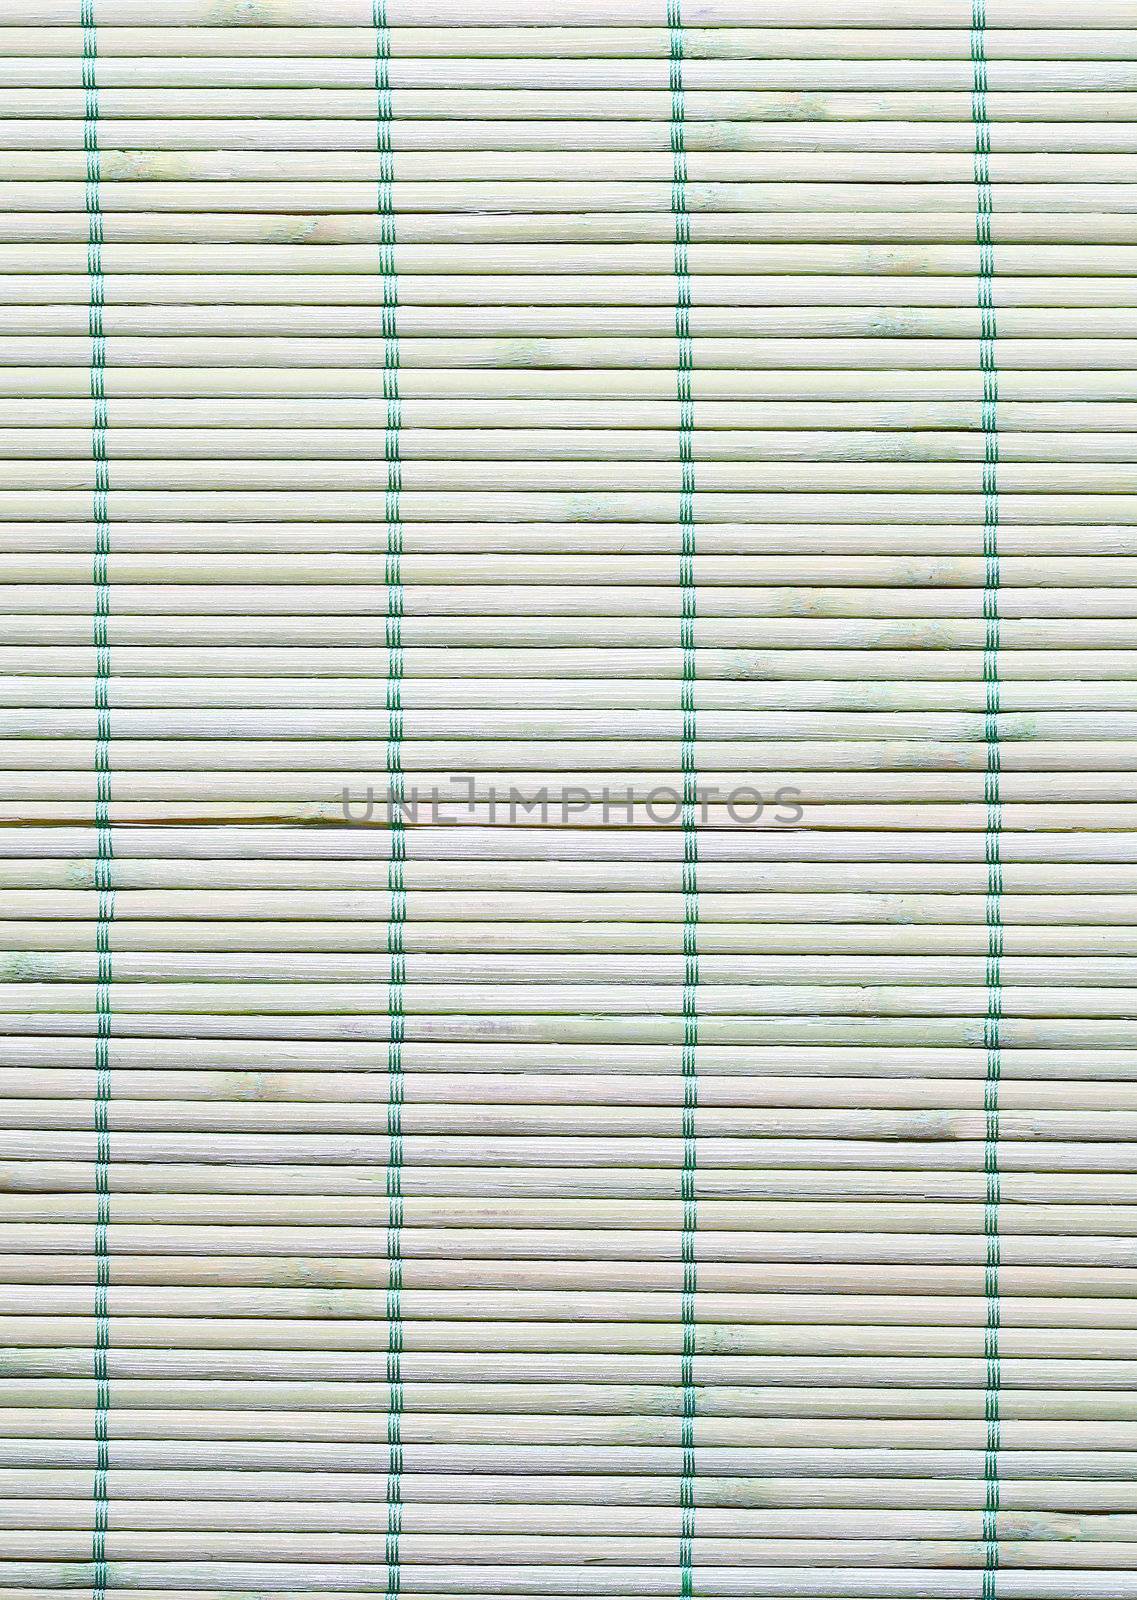 Bamboo mat. Nature background. Close up